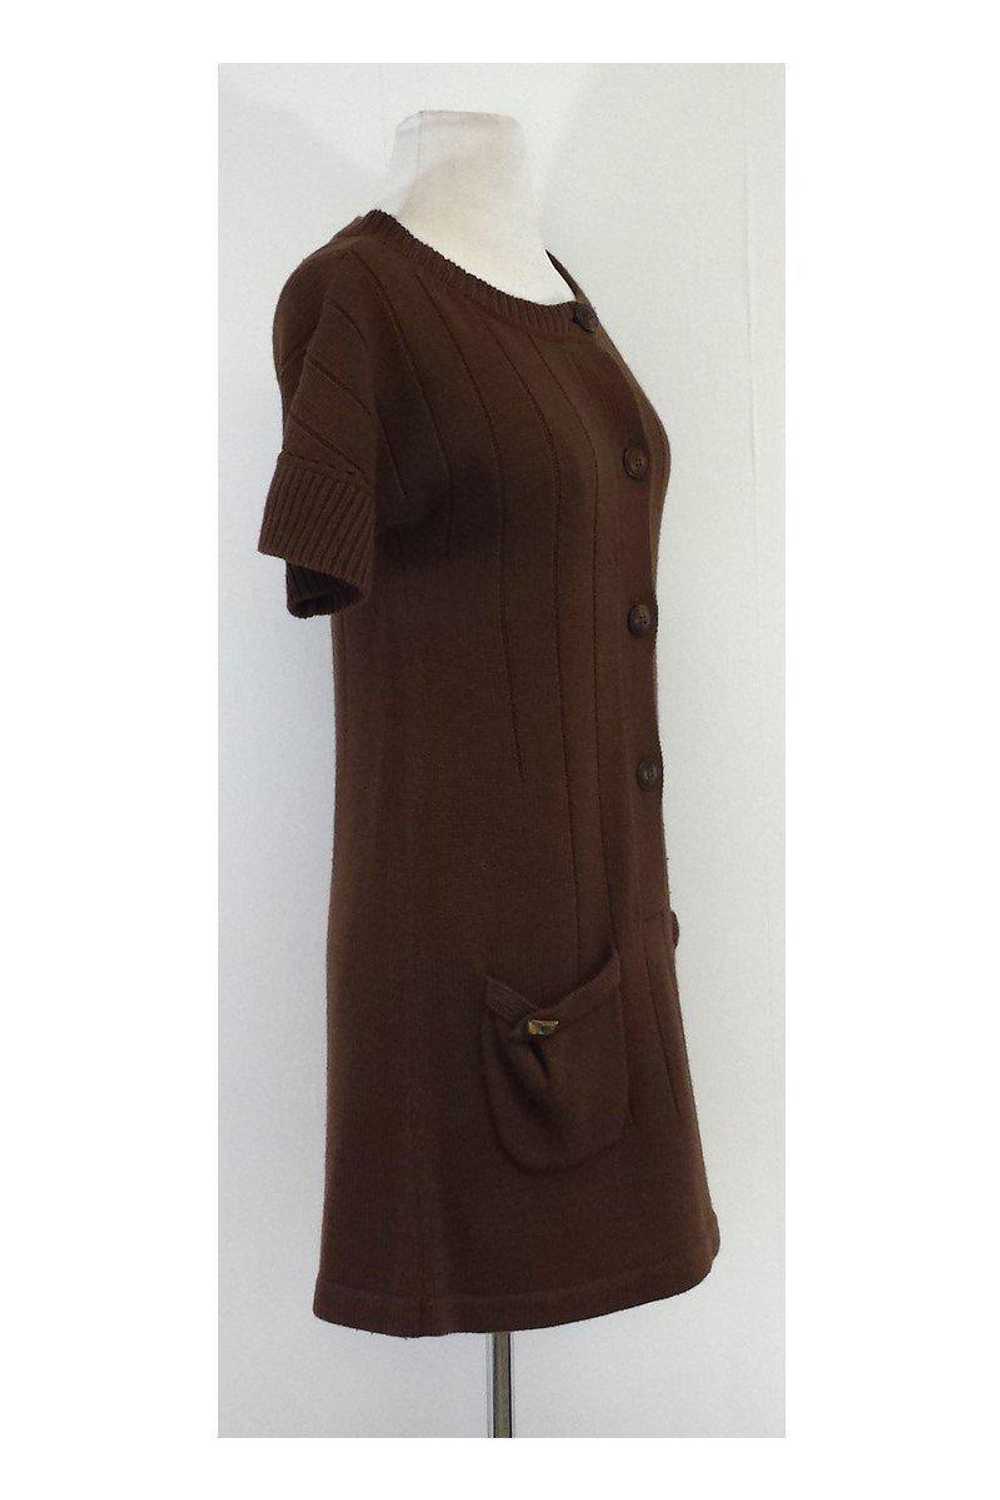 Mayle - Brown Short Sleeve Sweater Dress Sz S - image 2